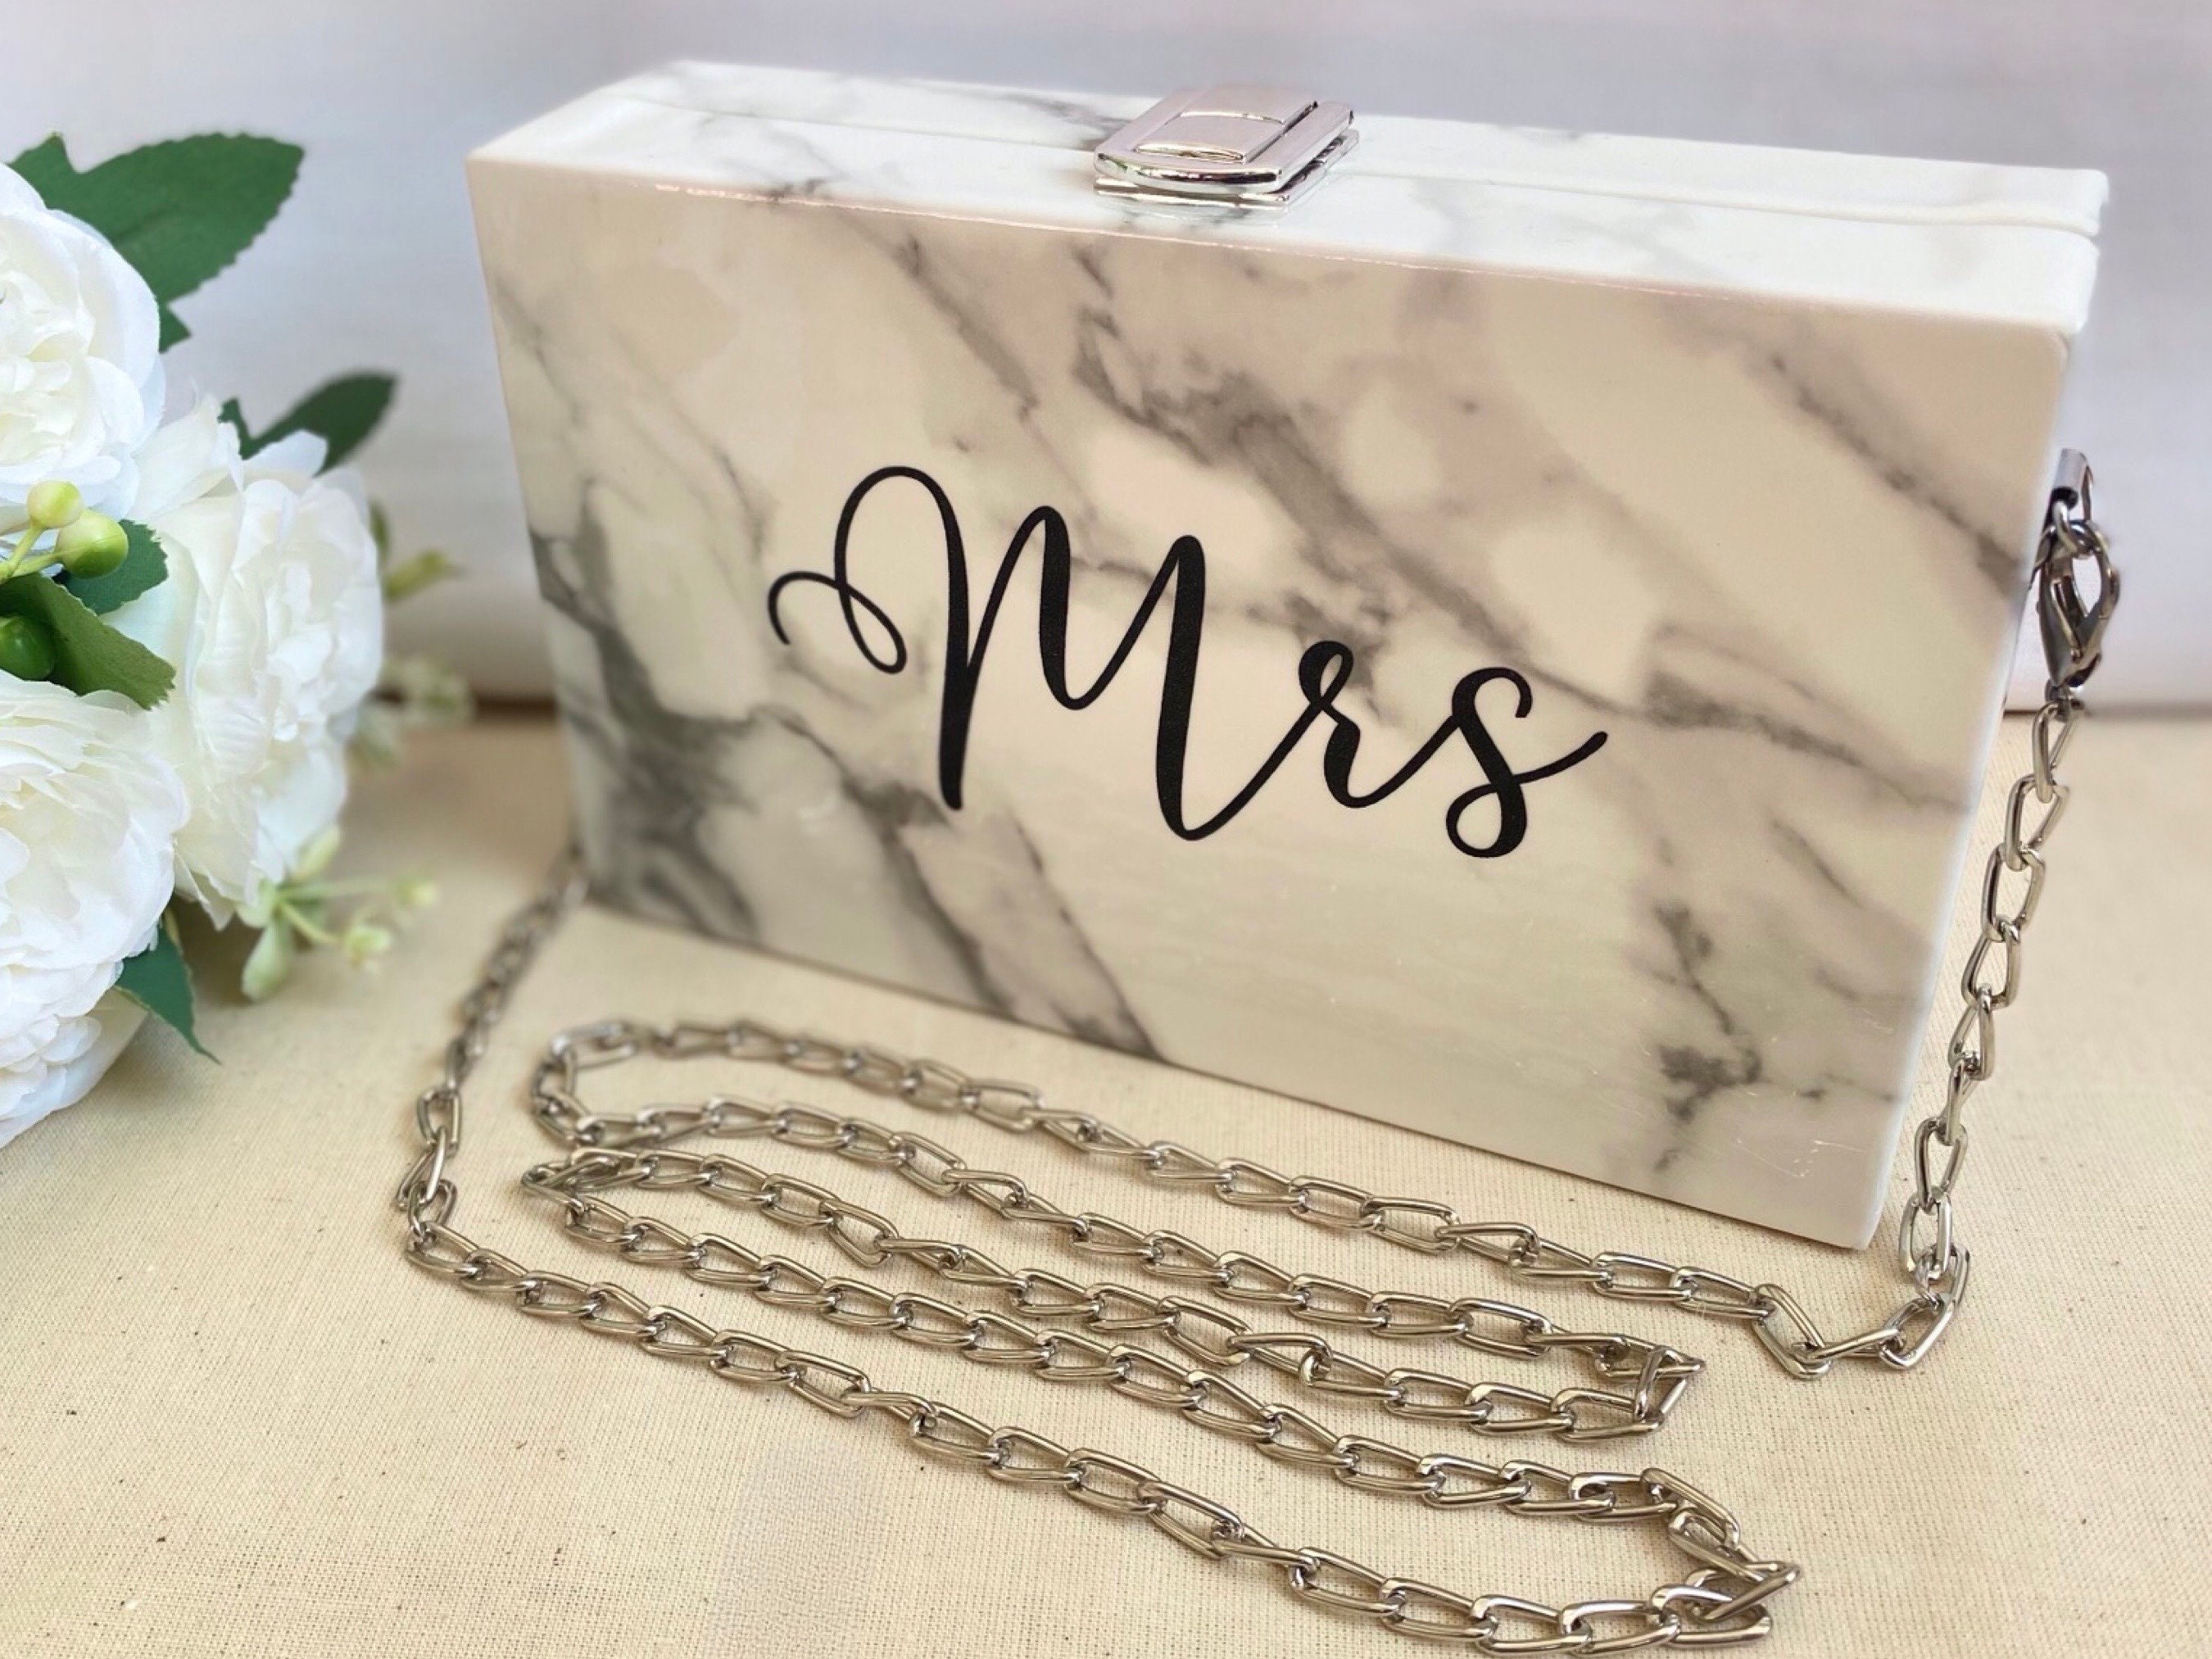 Luxury Designer Acrylic Box Handbag Women Glitter Shiny Rhinestone Diamond  tassel Evening Bag Wedding Party Clutch Purse B548